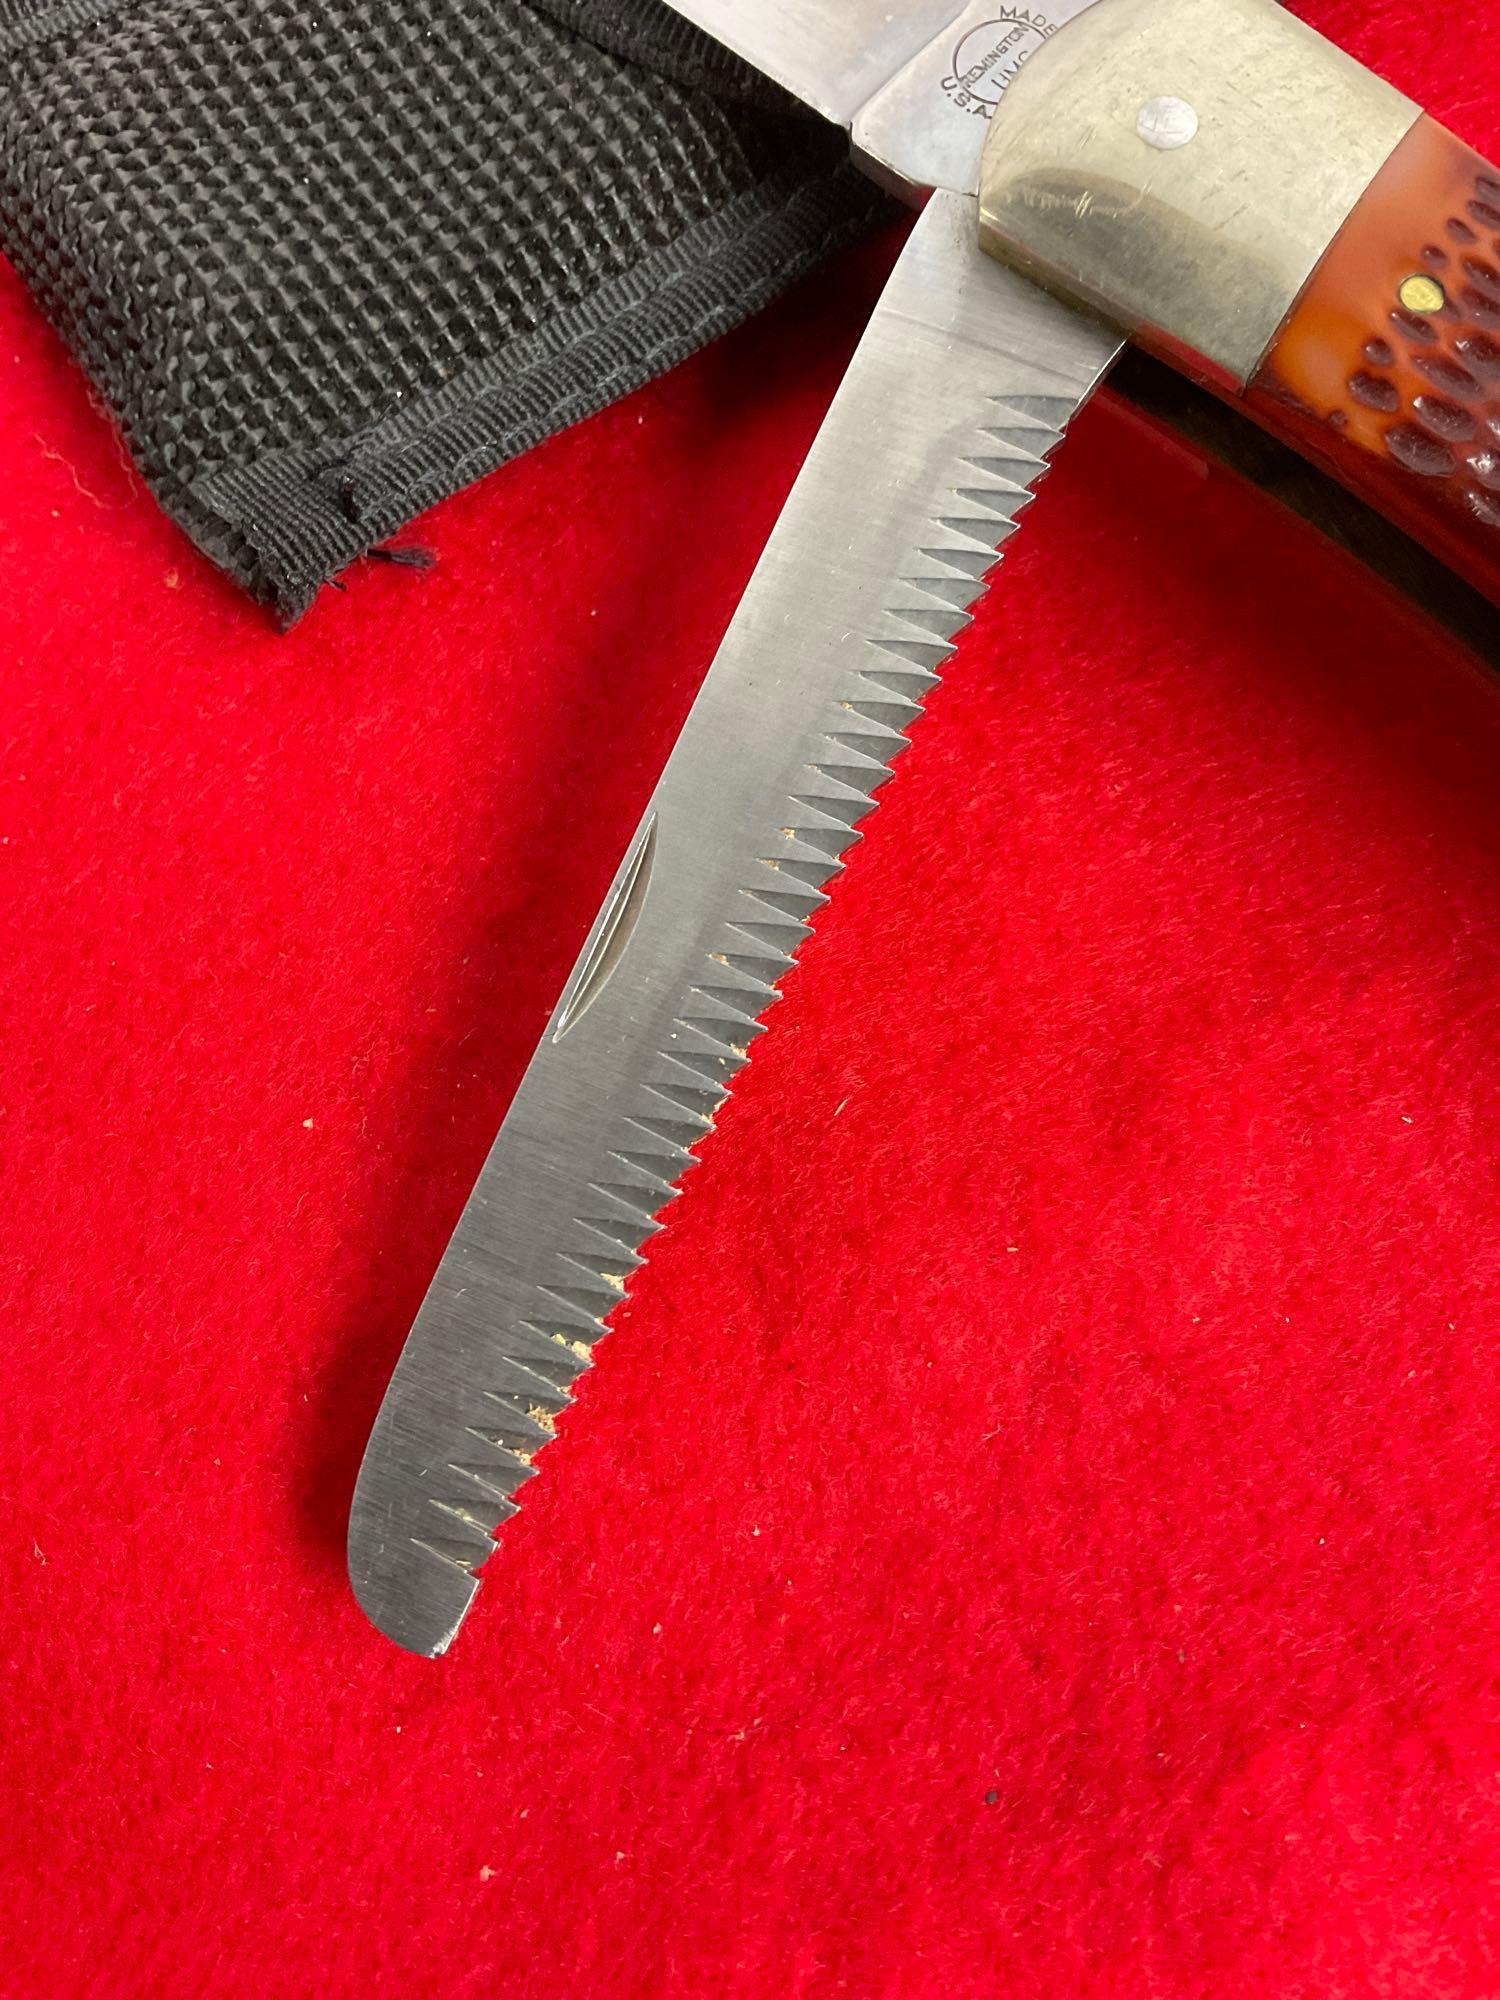 Remington UMC R-3 Dual Blade Folding Pocket Knife w/ Sheathe - See pics